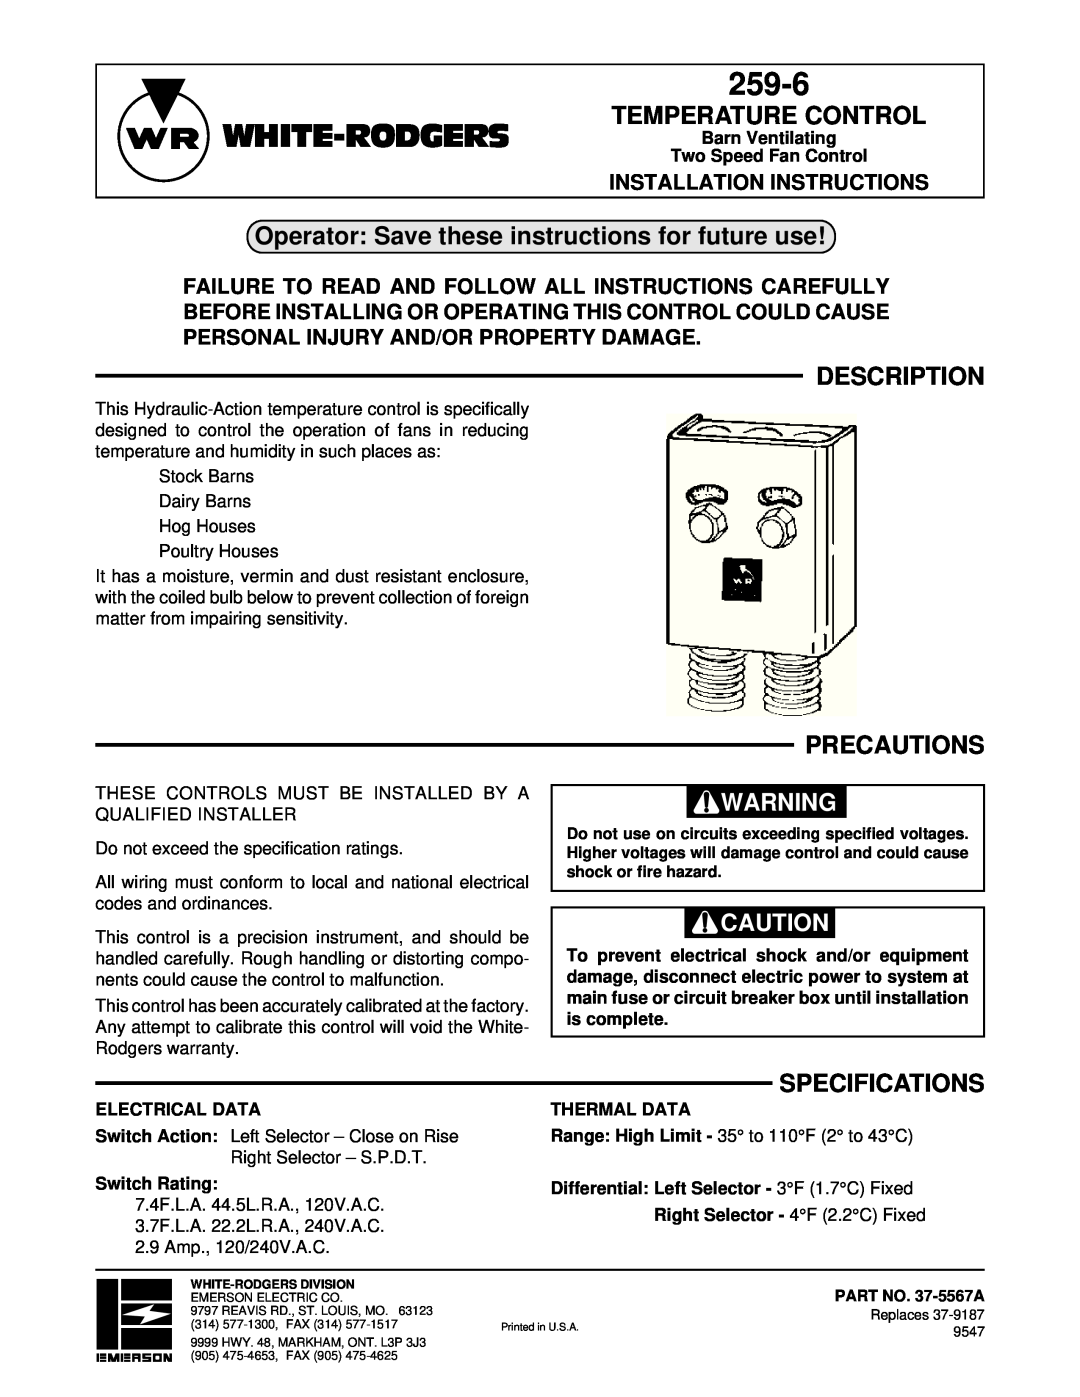 White Rodgers 259-6 installation instructions White-Rodgers, Temperature Control, Description, Precautions, Thermal Data 